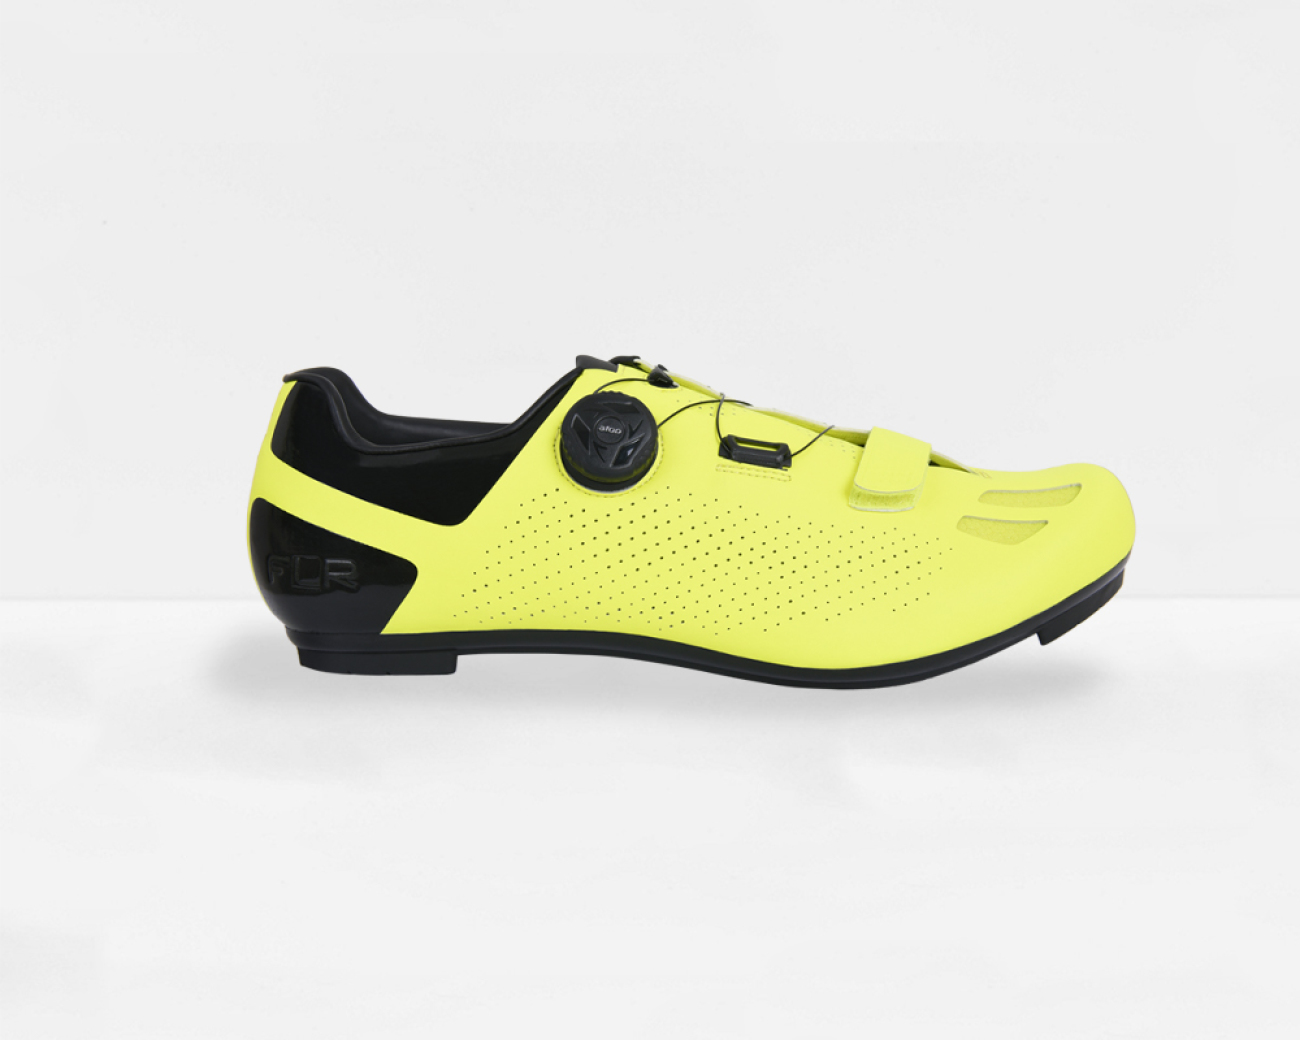 FLR Kerékpáros Cipő - F11 - Sárga